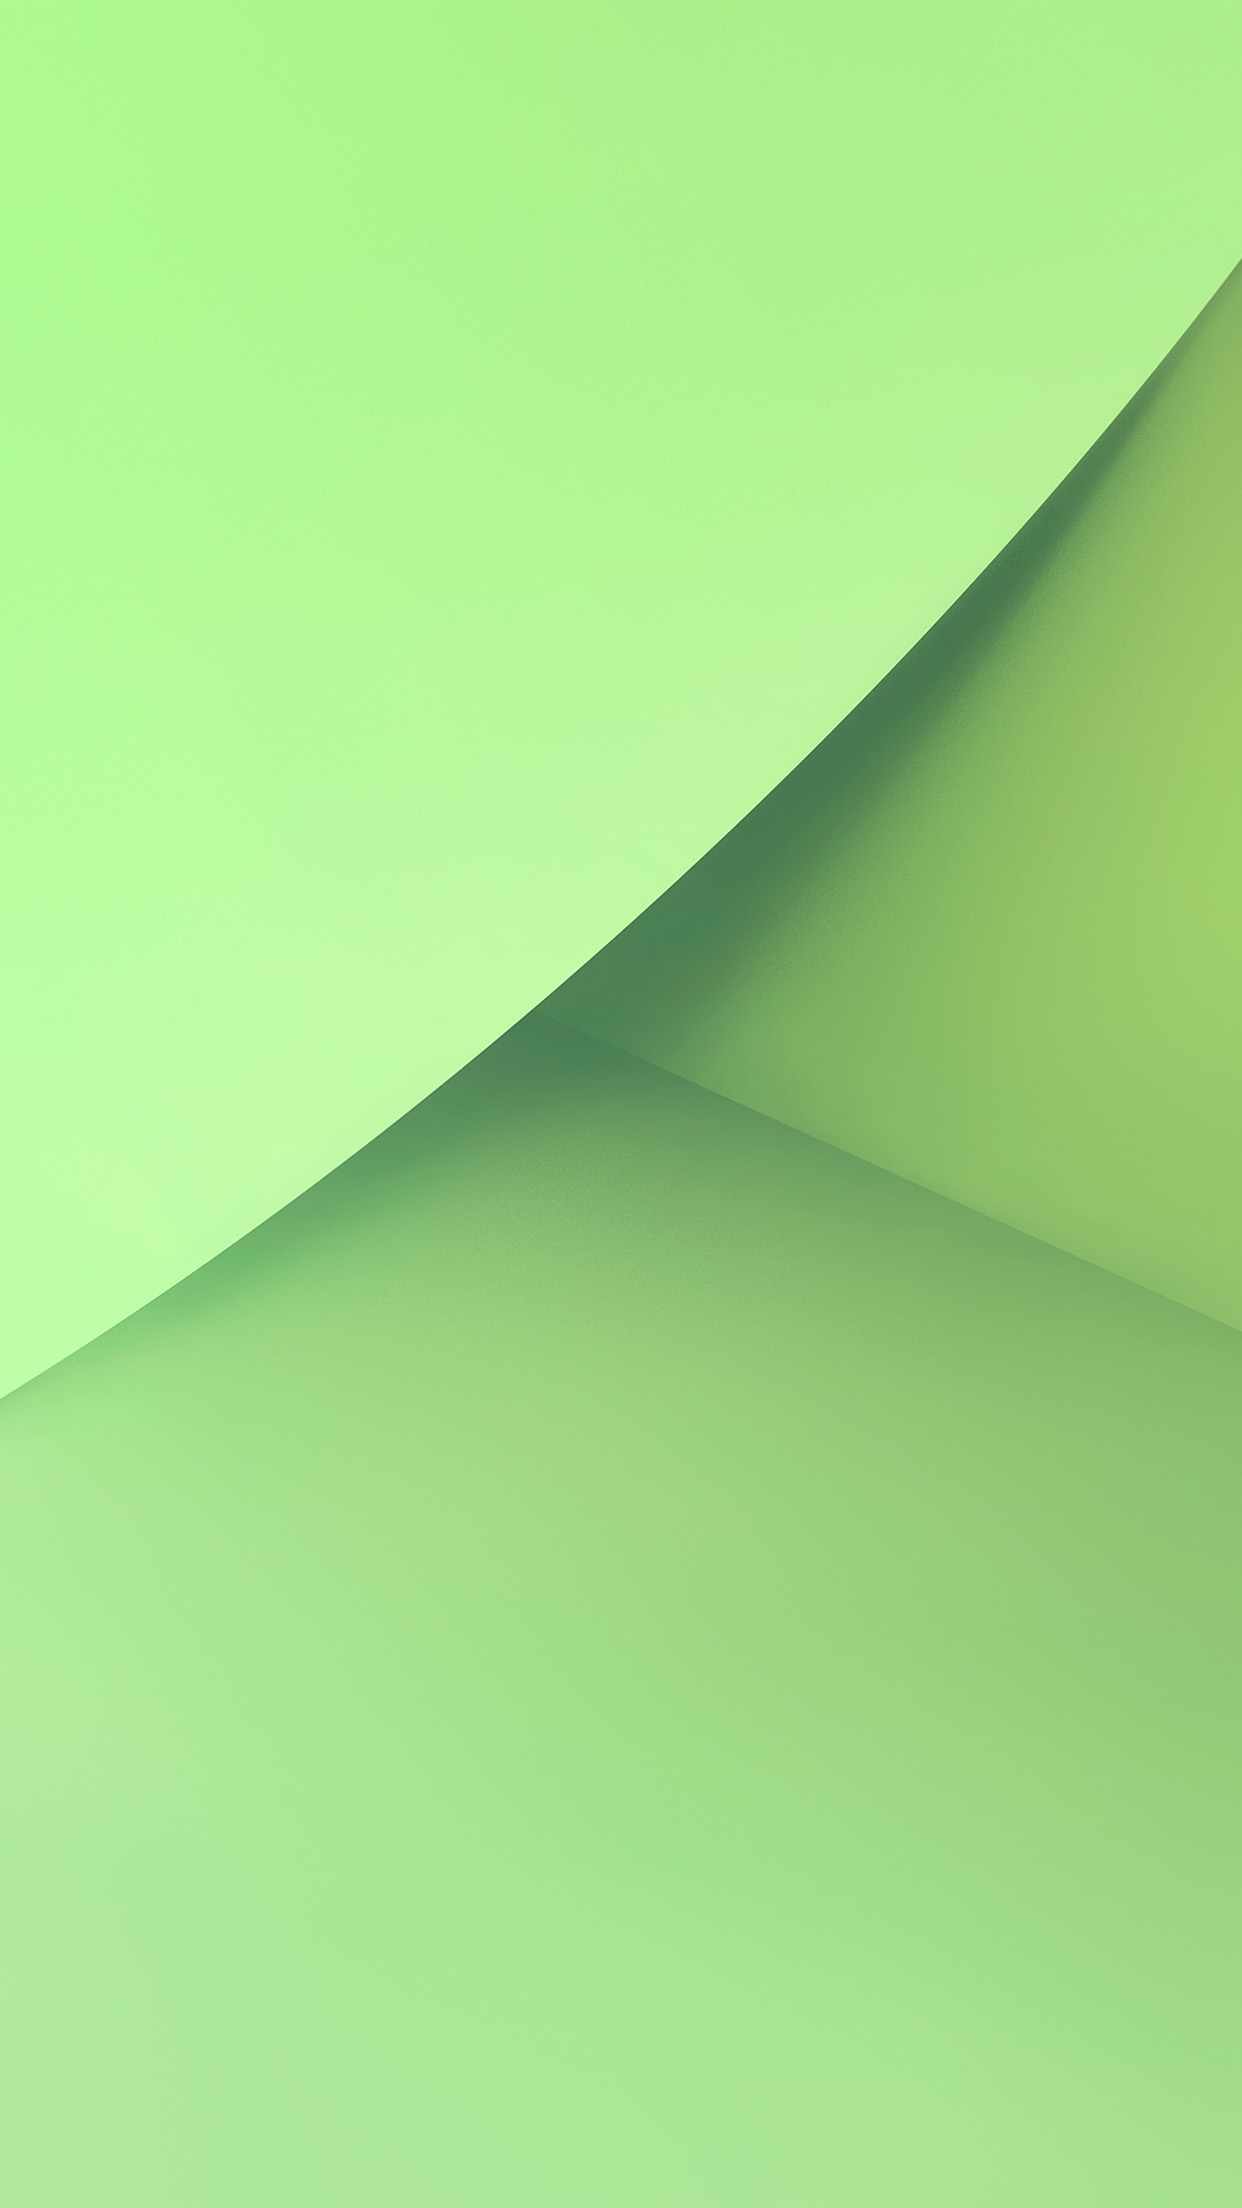 Note 7 Green Galaxy Circle Abstract Pattern Android wallpaper